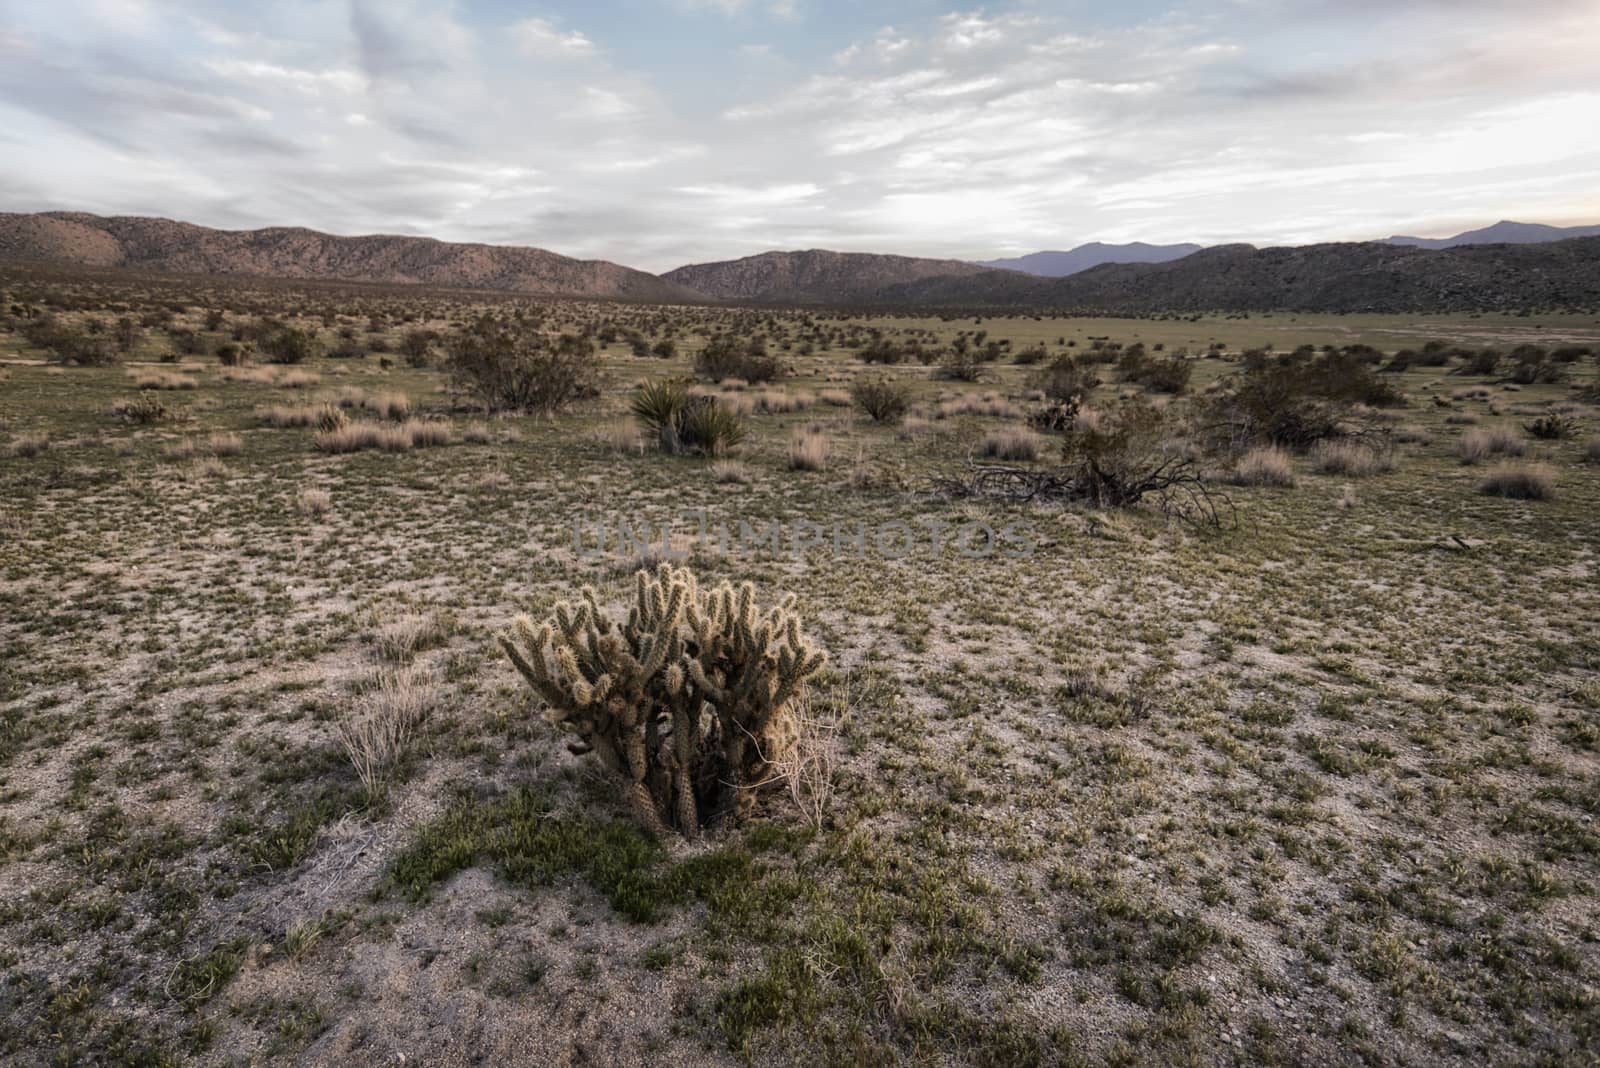 Landscape in the Anza-Borrego Desert by patricklienin